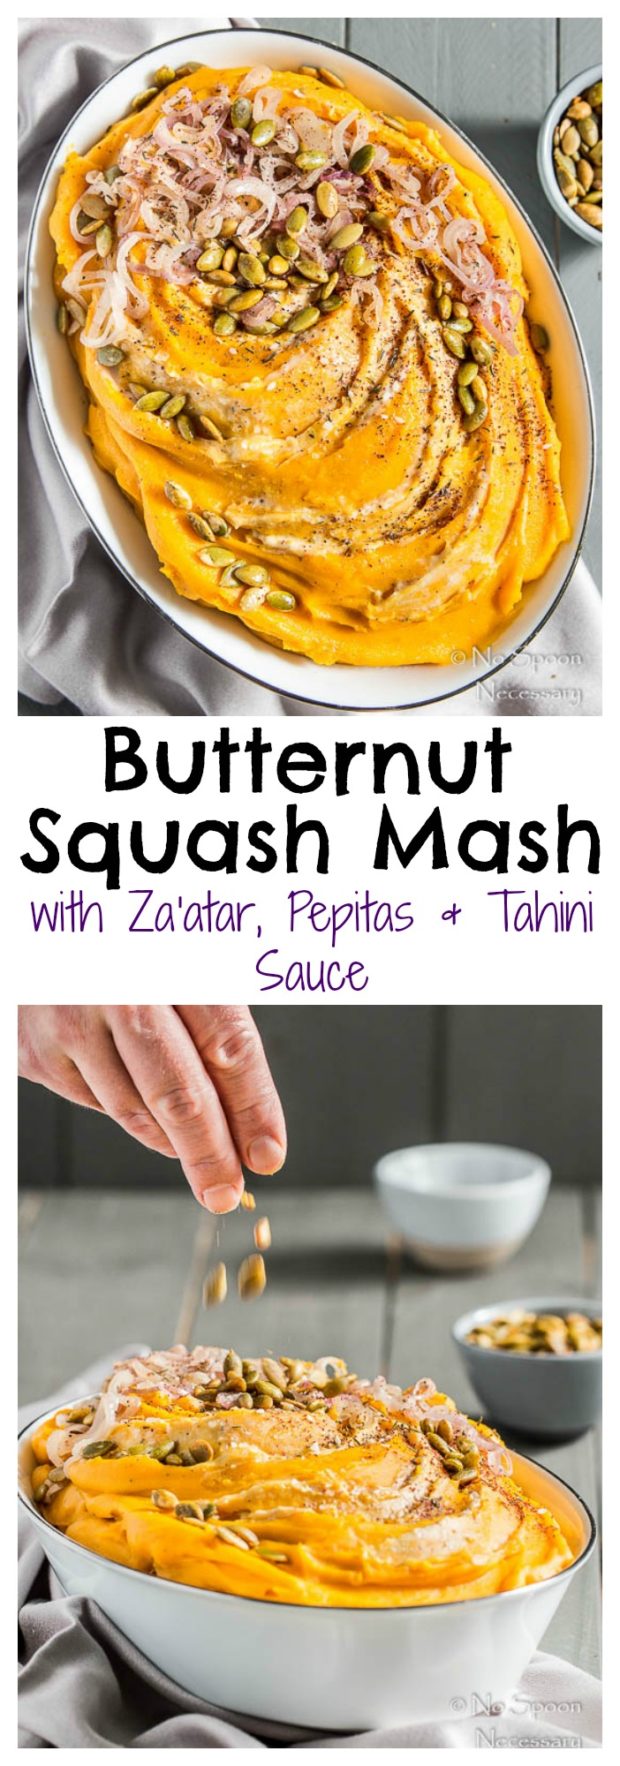 Butternut Squash Mash with Za'atar, Pepitas, Shallots & Tahini Sauce1